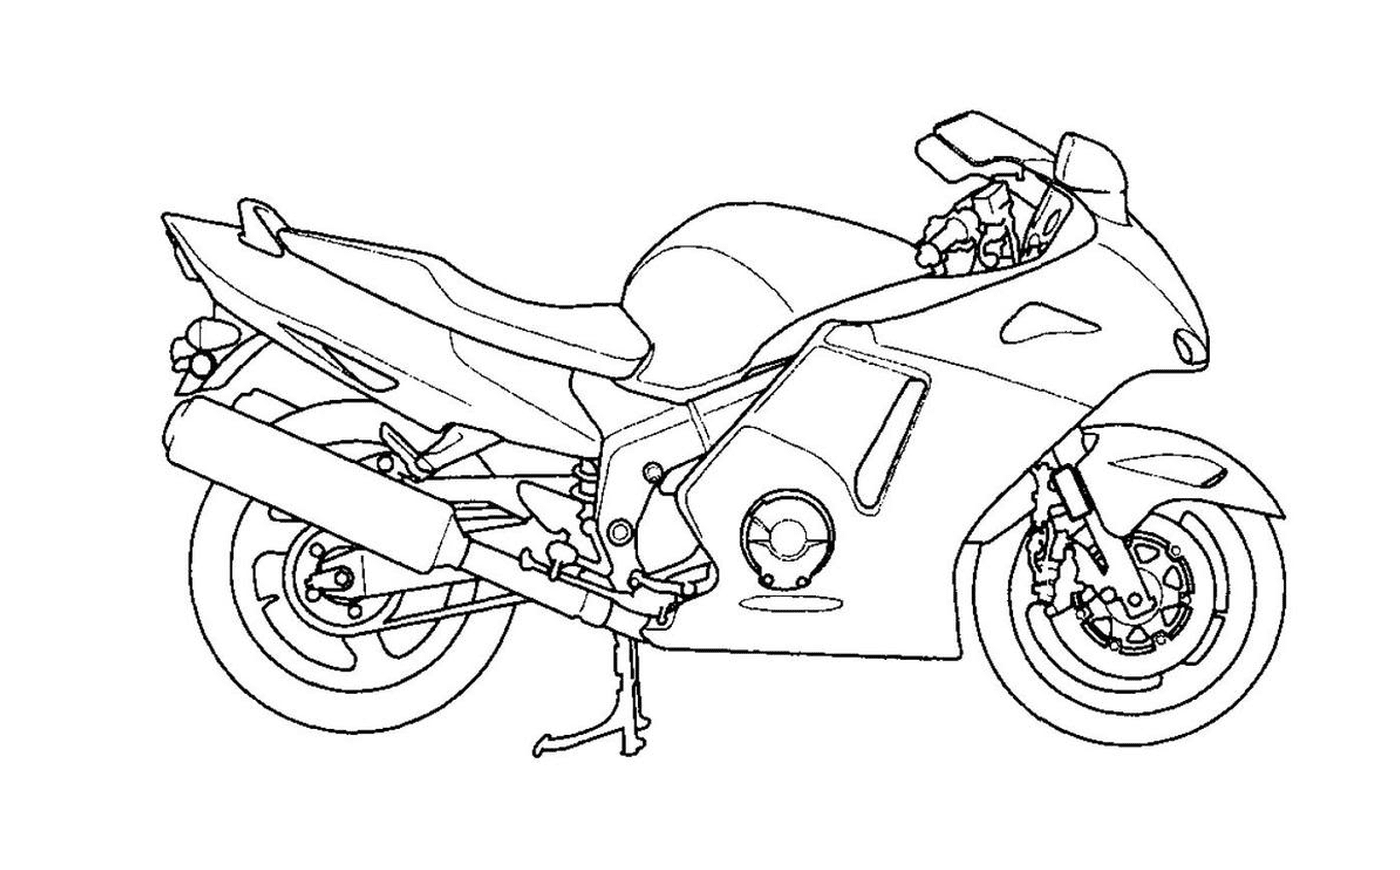   motocyclette moderne et sportive 